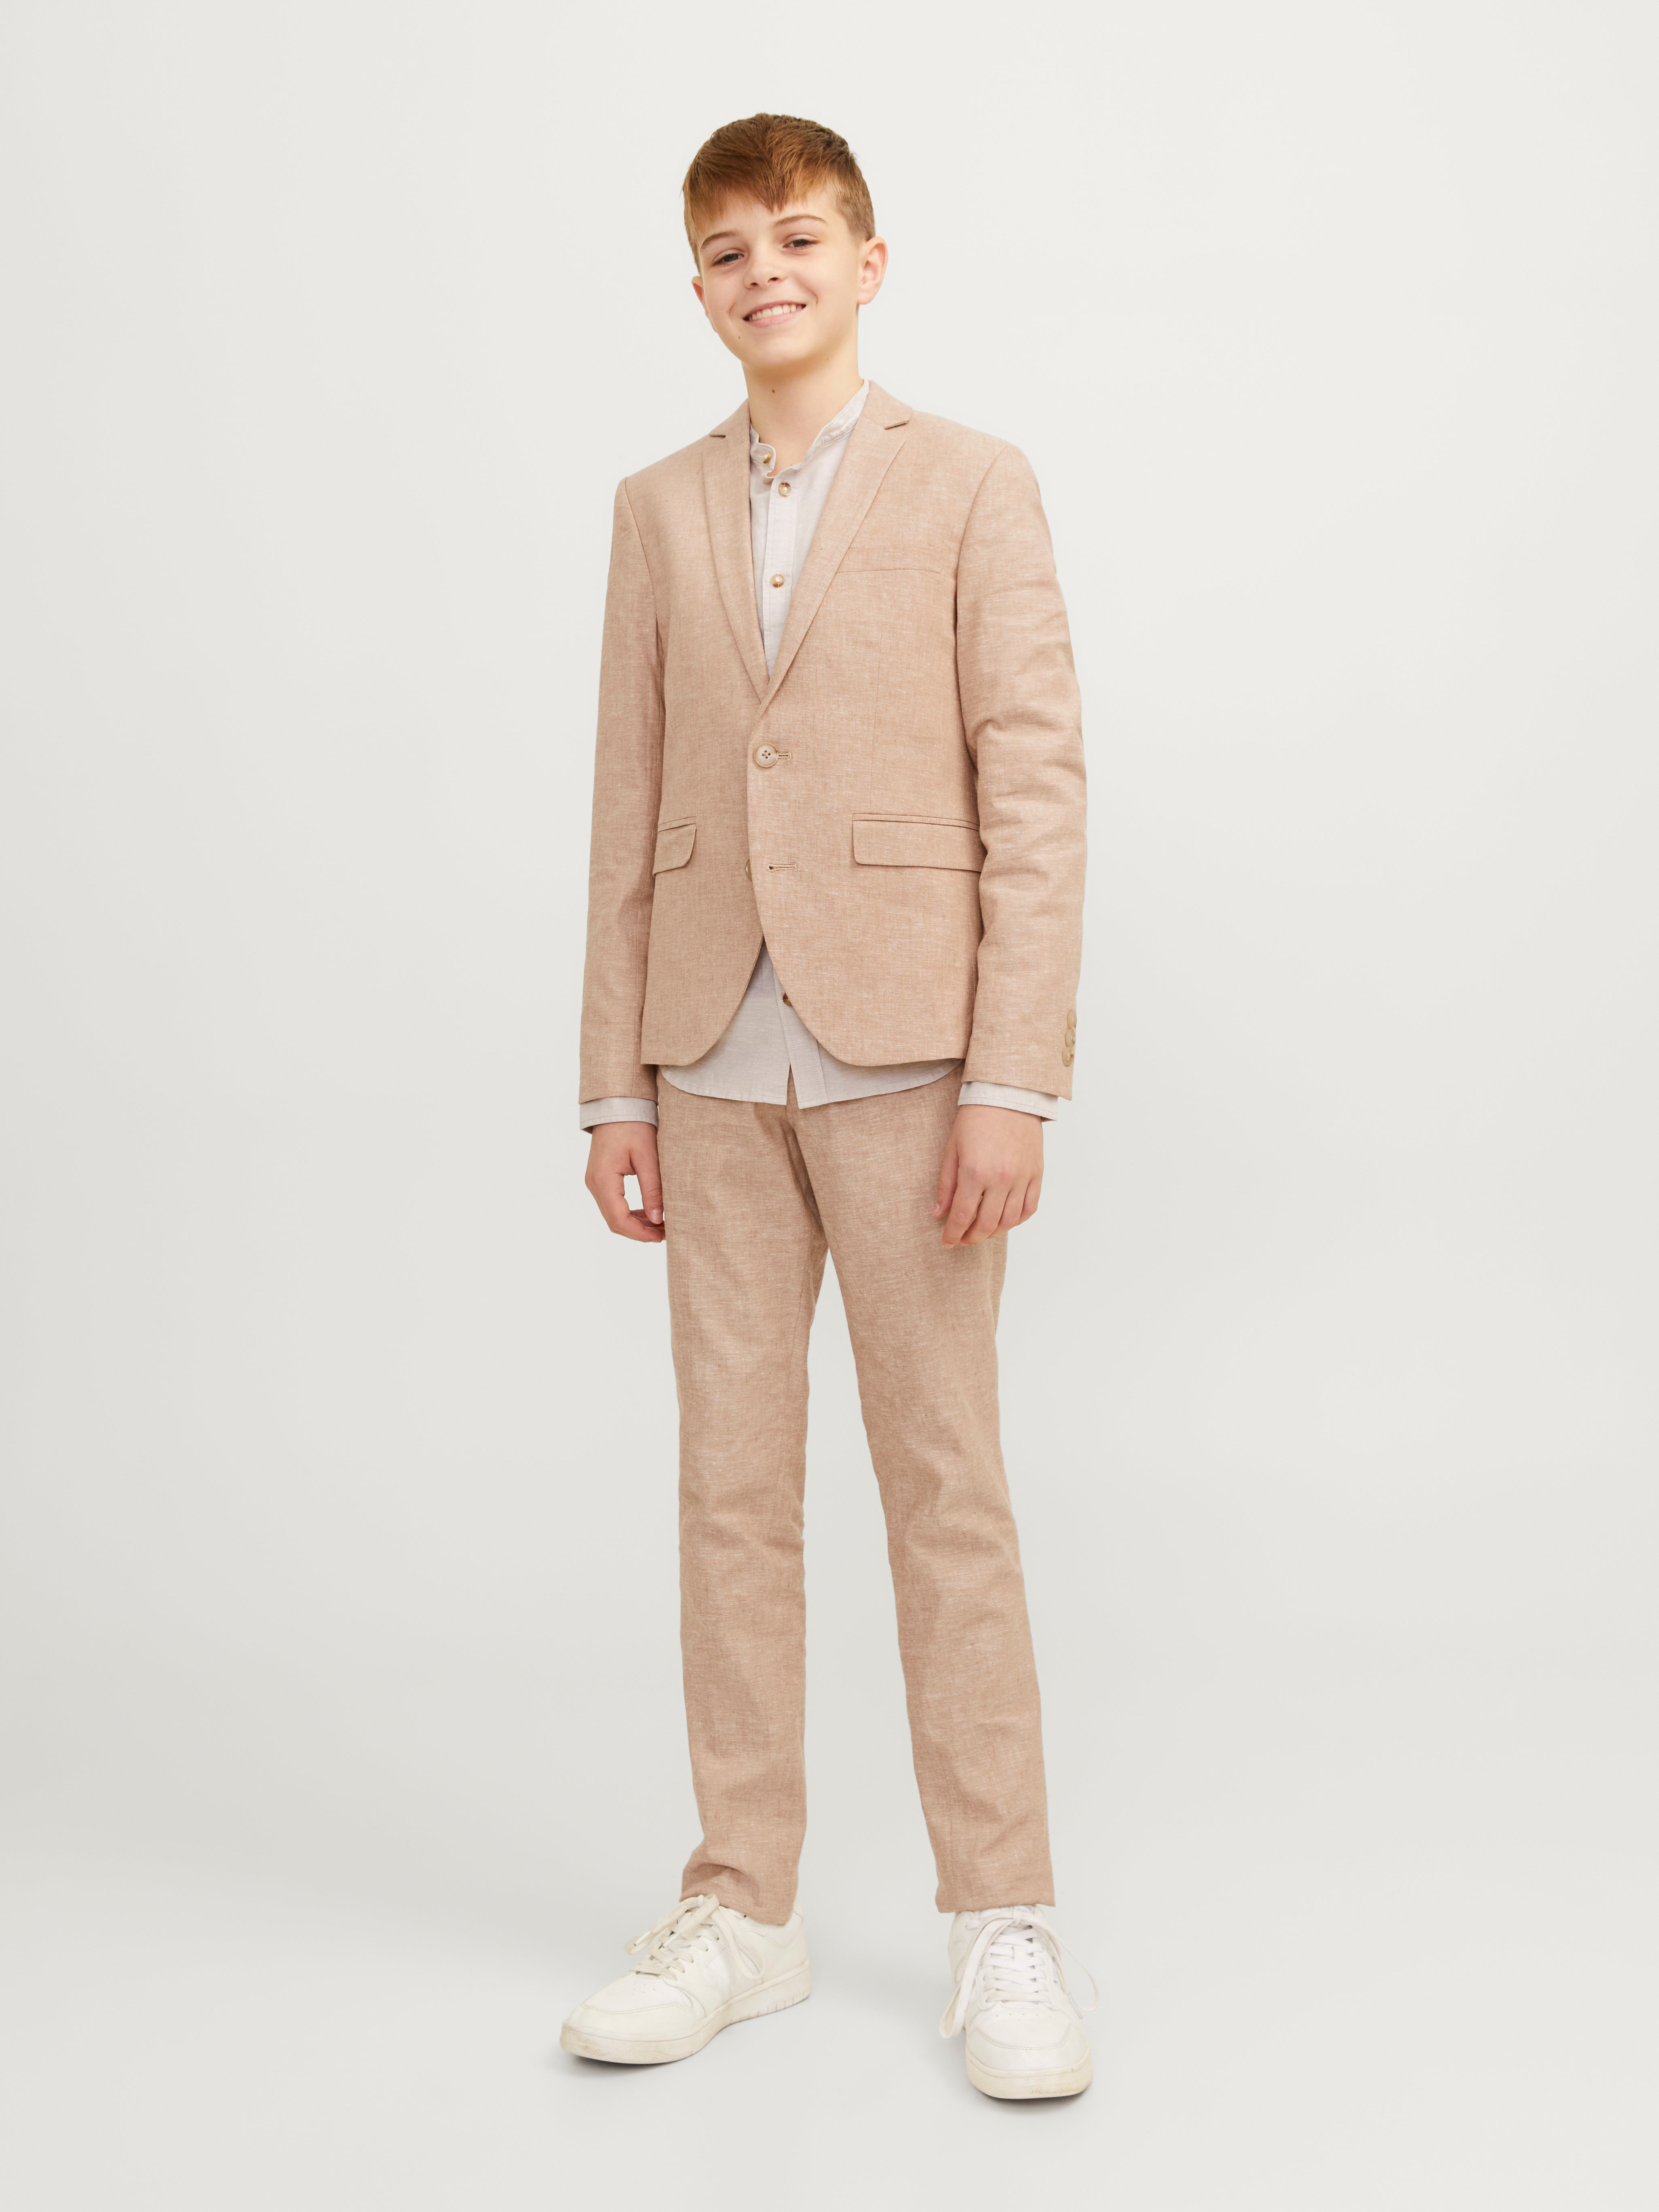 JPRRIVIERA Suit For boys